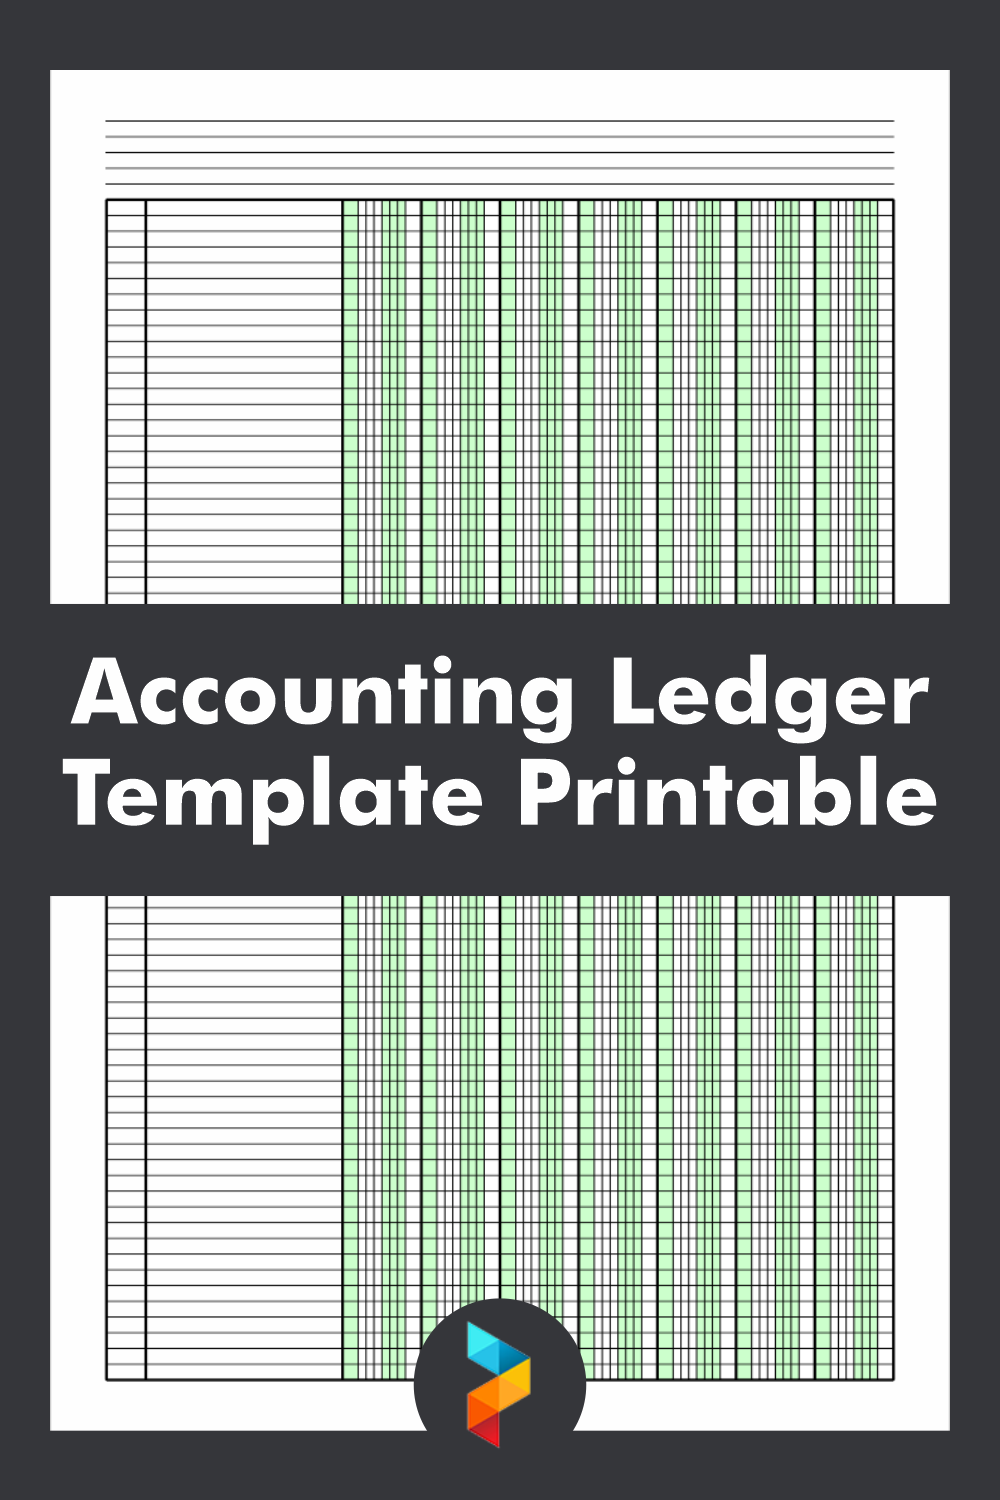 Accounting Ledger Template Printable